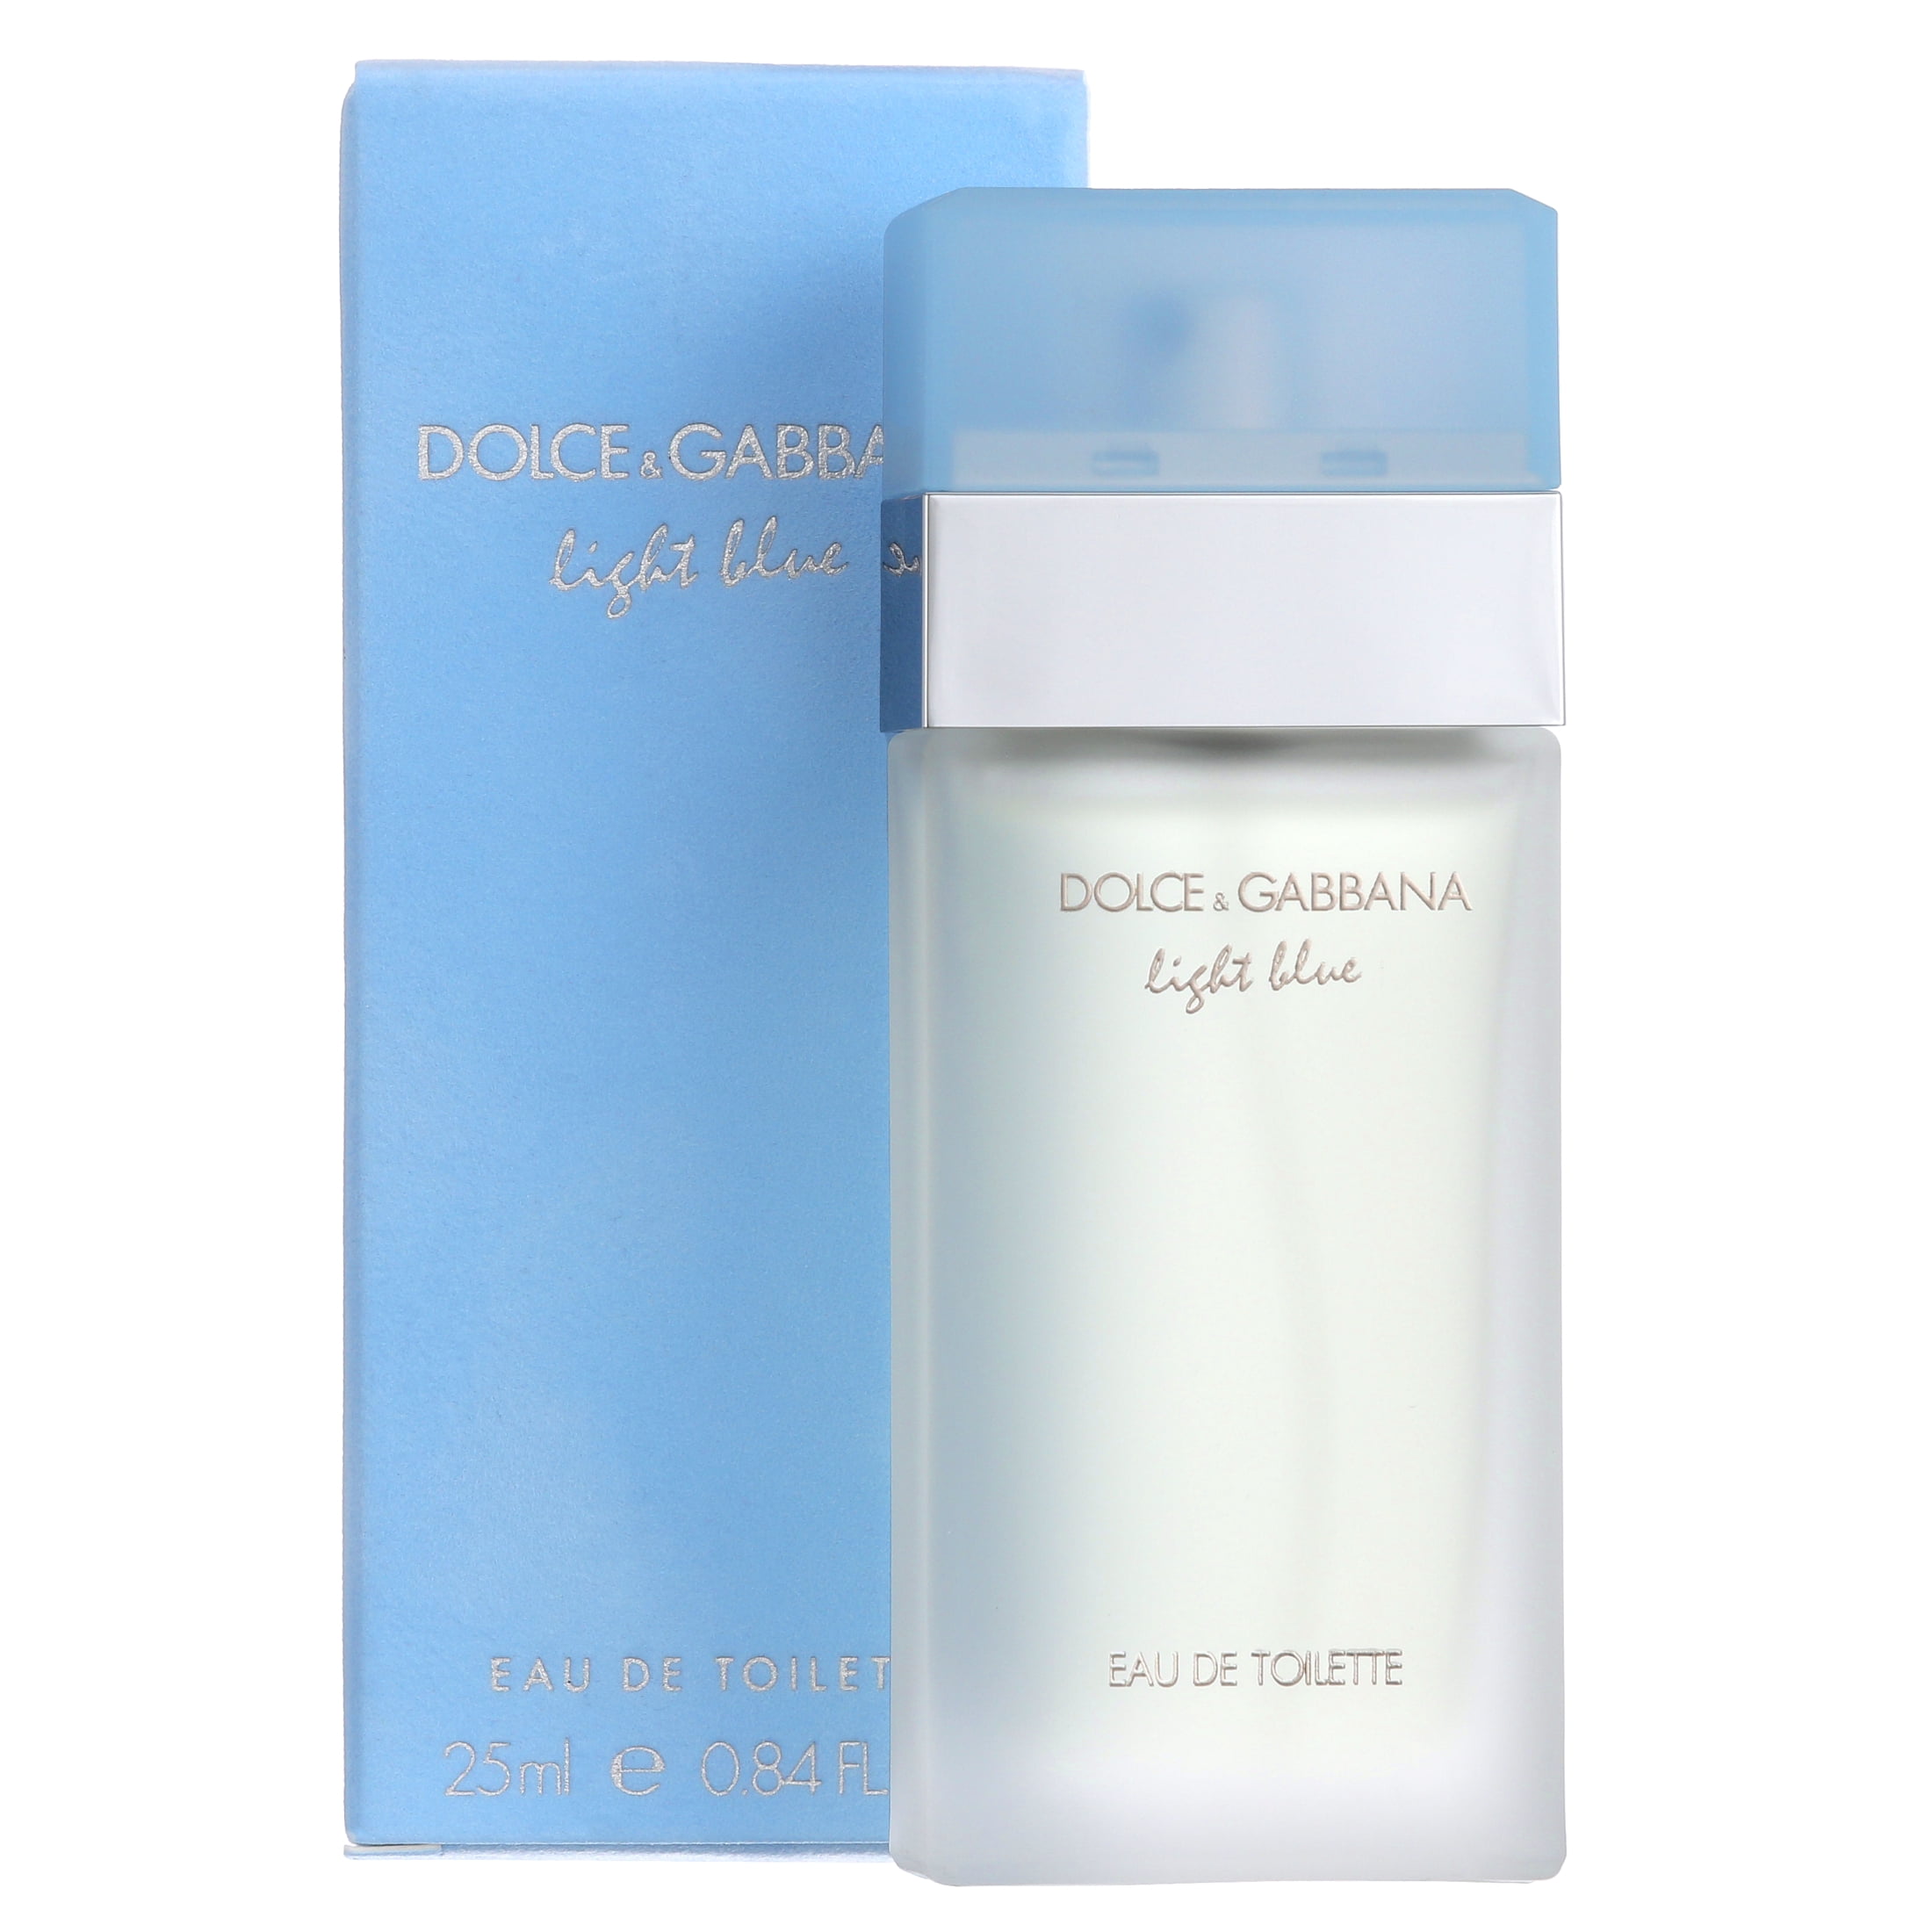 jeg er sulten maske åbning Dolce & Gabbana Light Blue Eau de Toilette, Perfume for Women, 0.85 oz -  Walmart.com